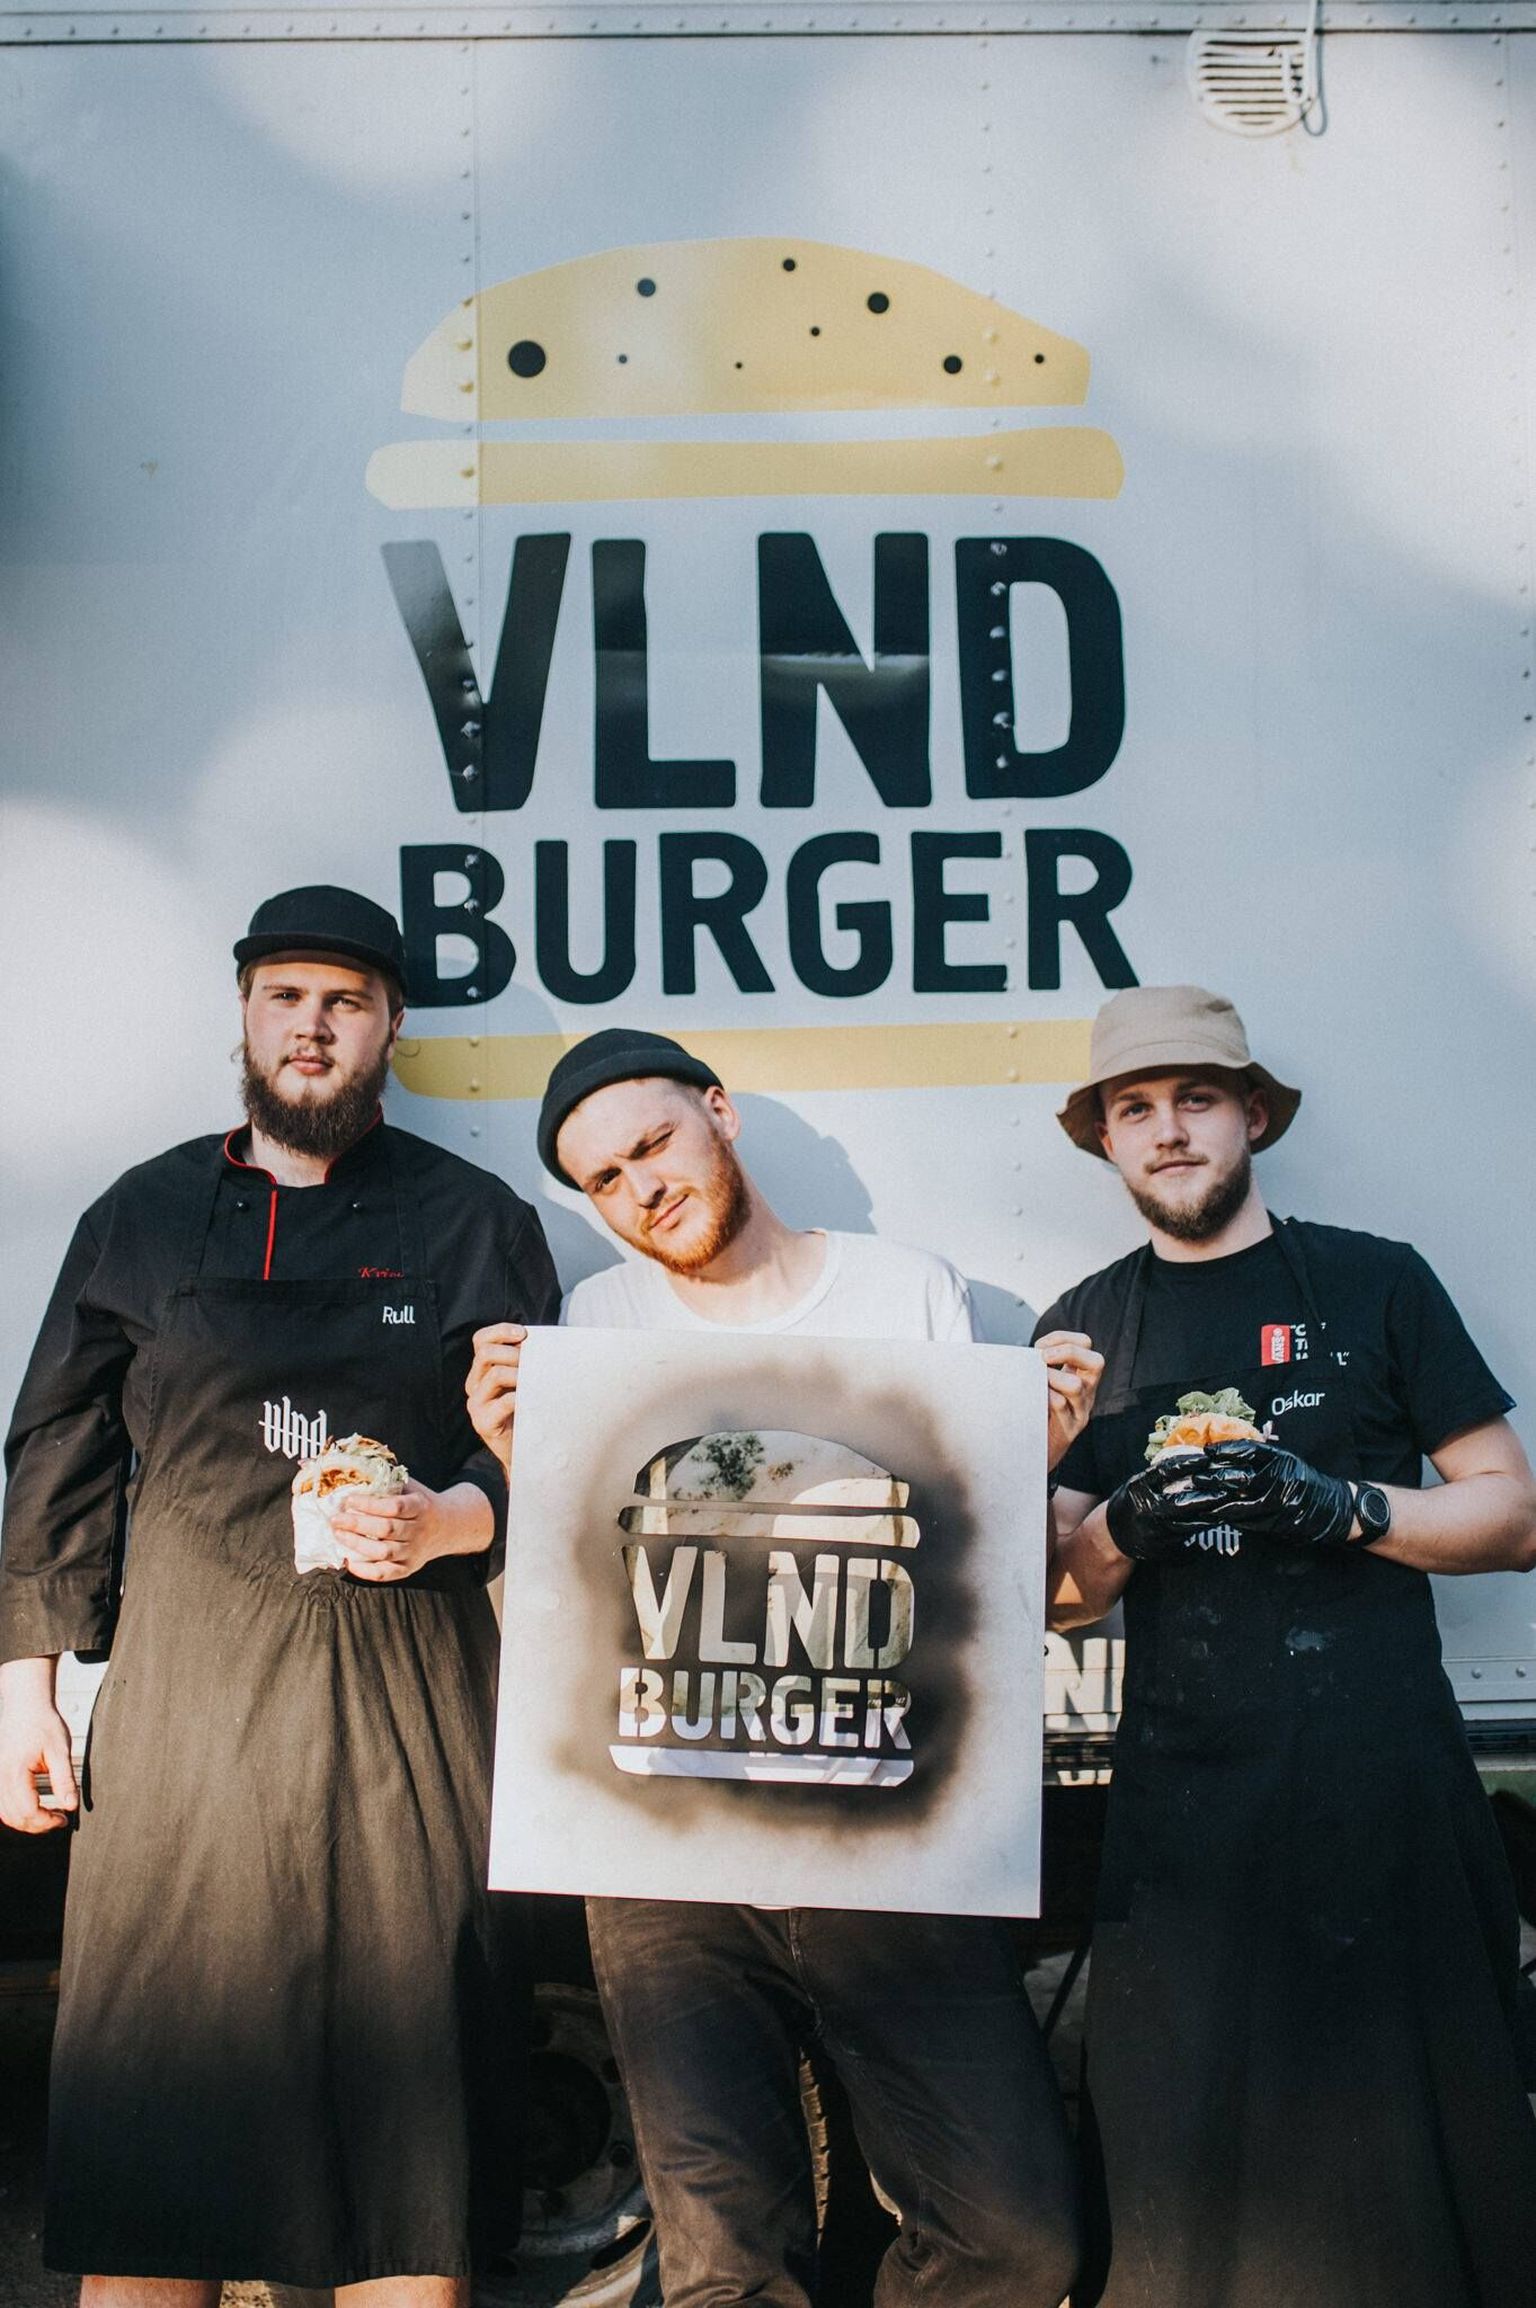 VLND Burger